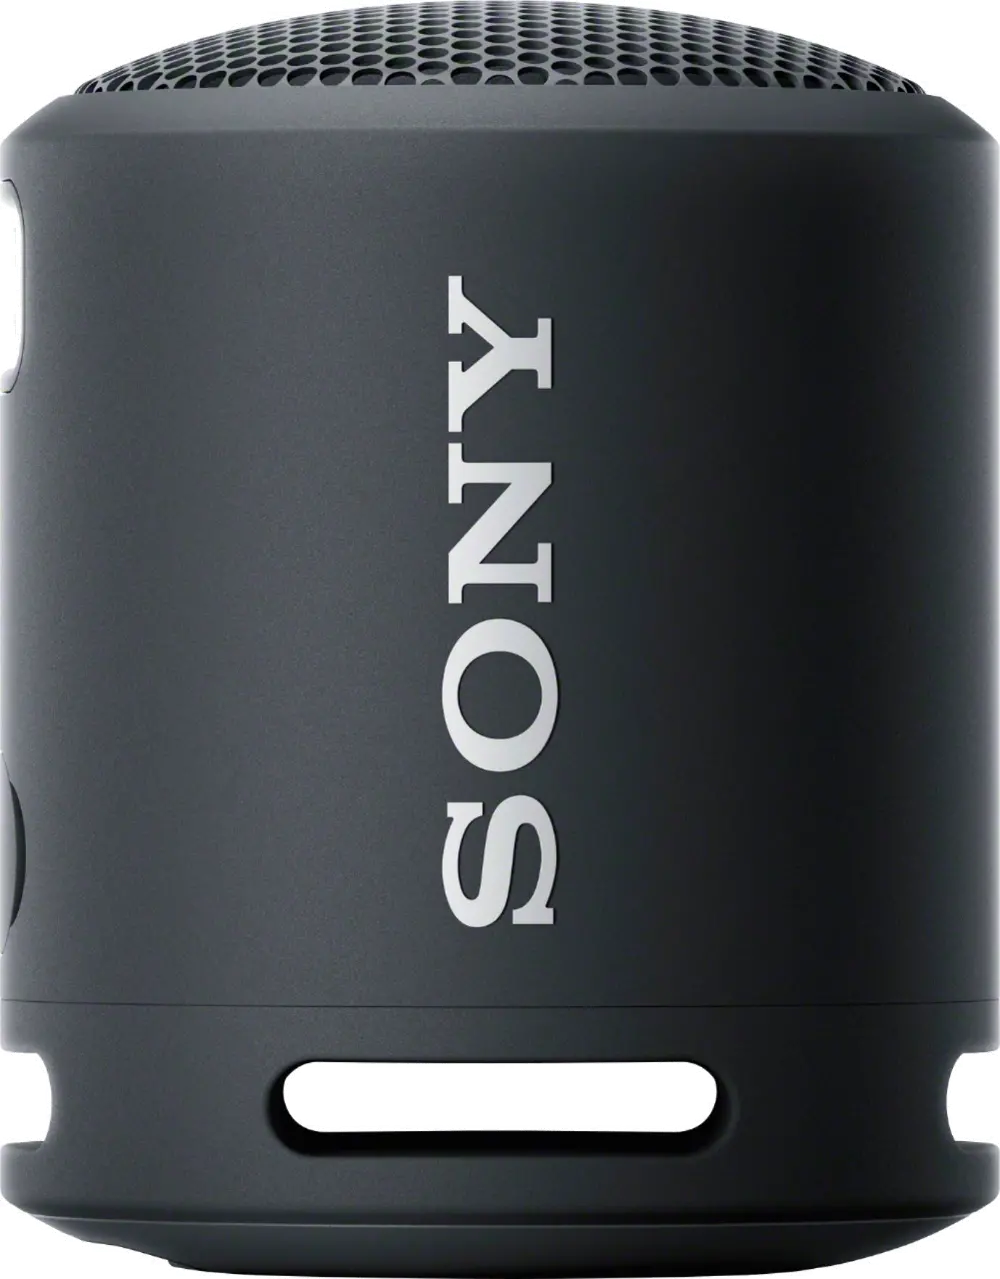 SRSXB13/BZ Sony XB13 Portable Bluetooth Speaker - Black-1